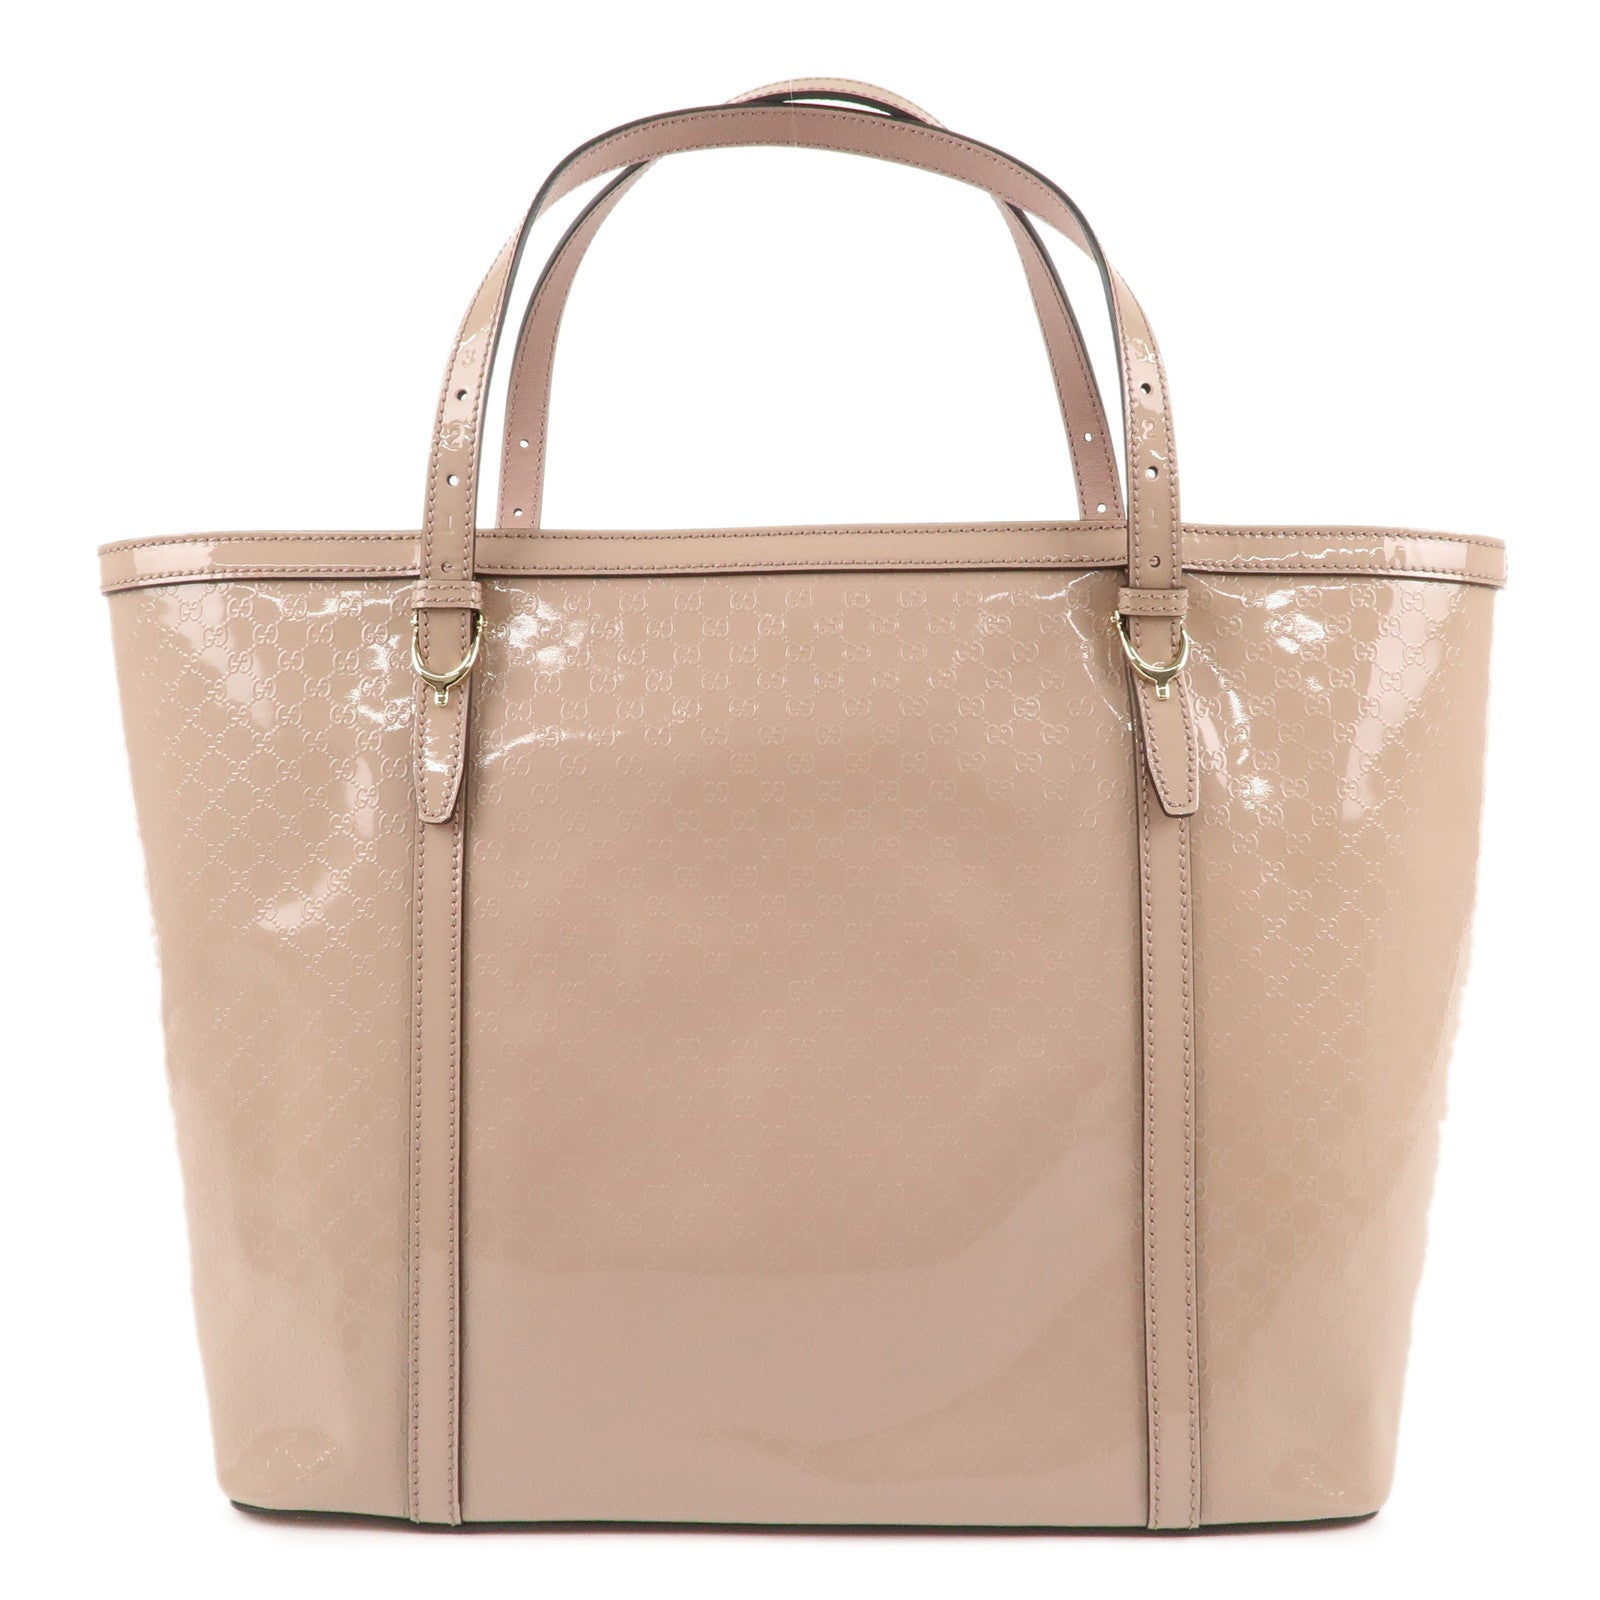 GUCCI-Micro-Guccissima-Patent-Leather-Tote-Bag-Pink-Beige-309613